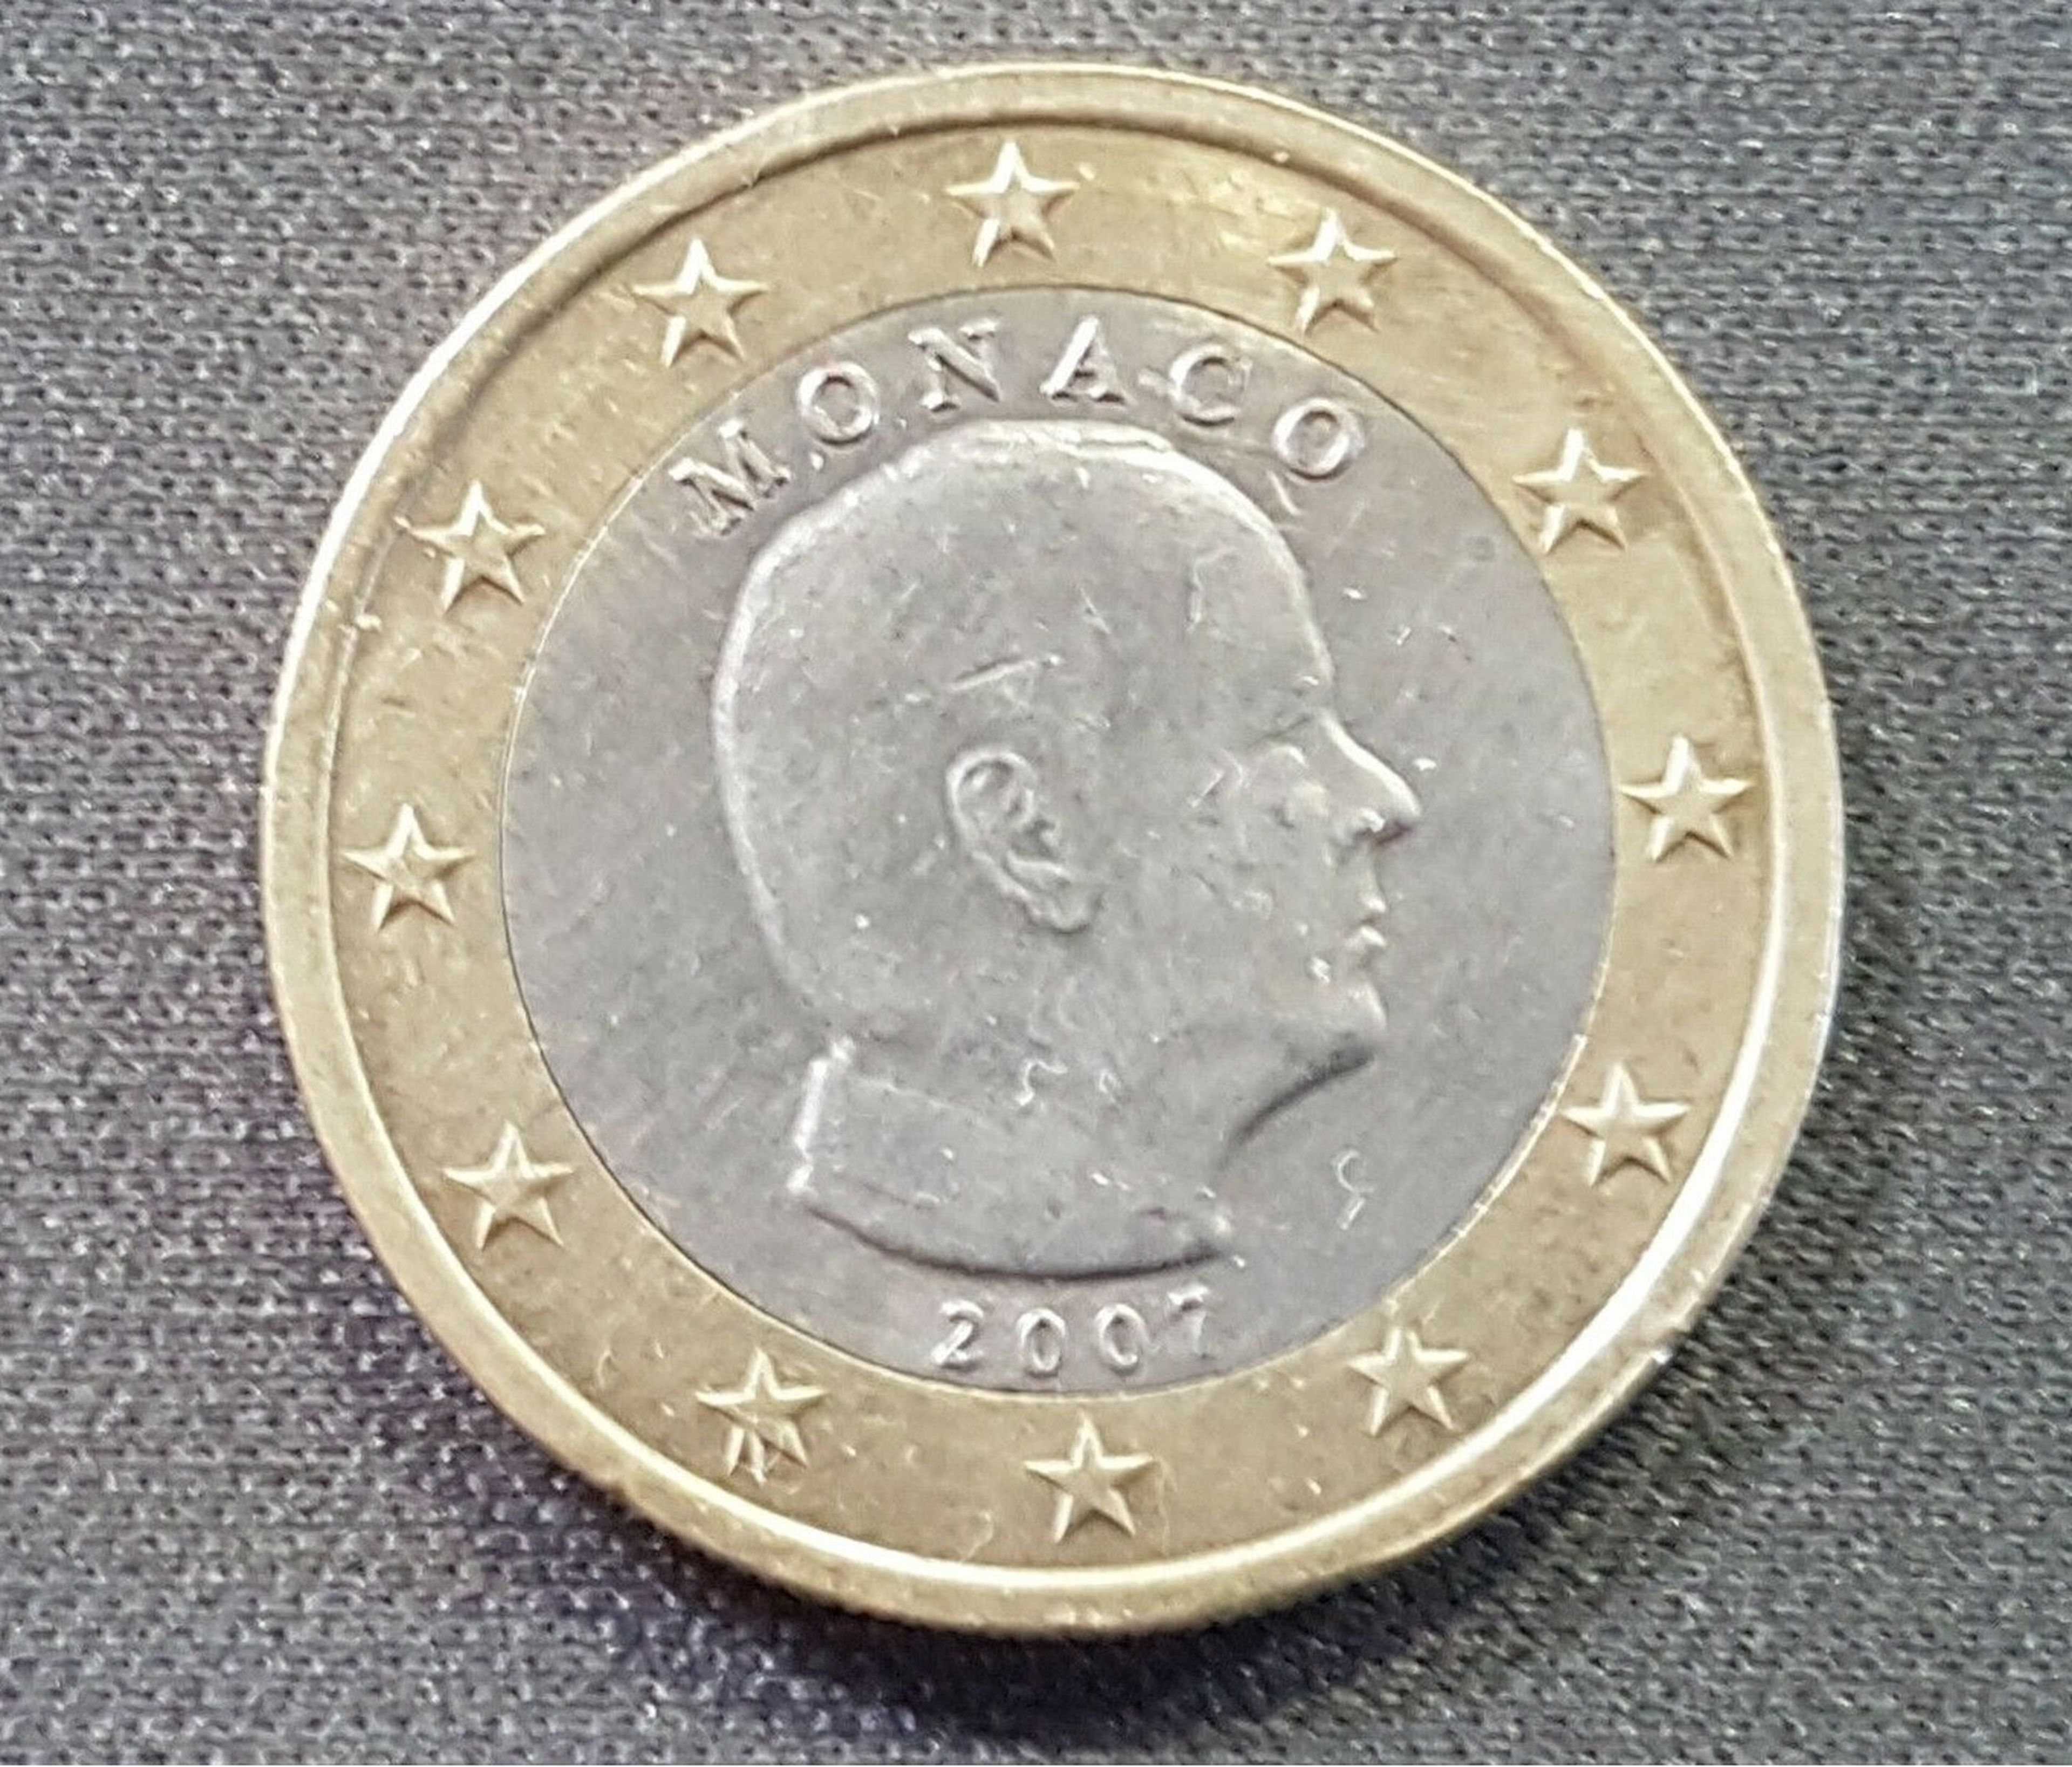 4.200+ Moneda 1 Euro Fotografías de stock, fotos e imágenes libres